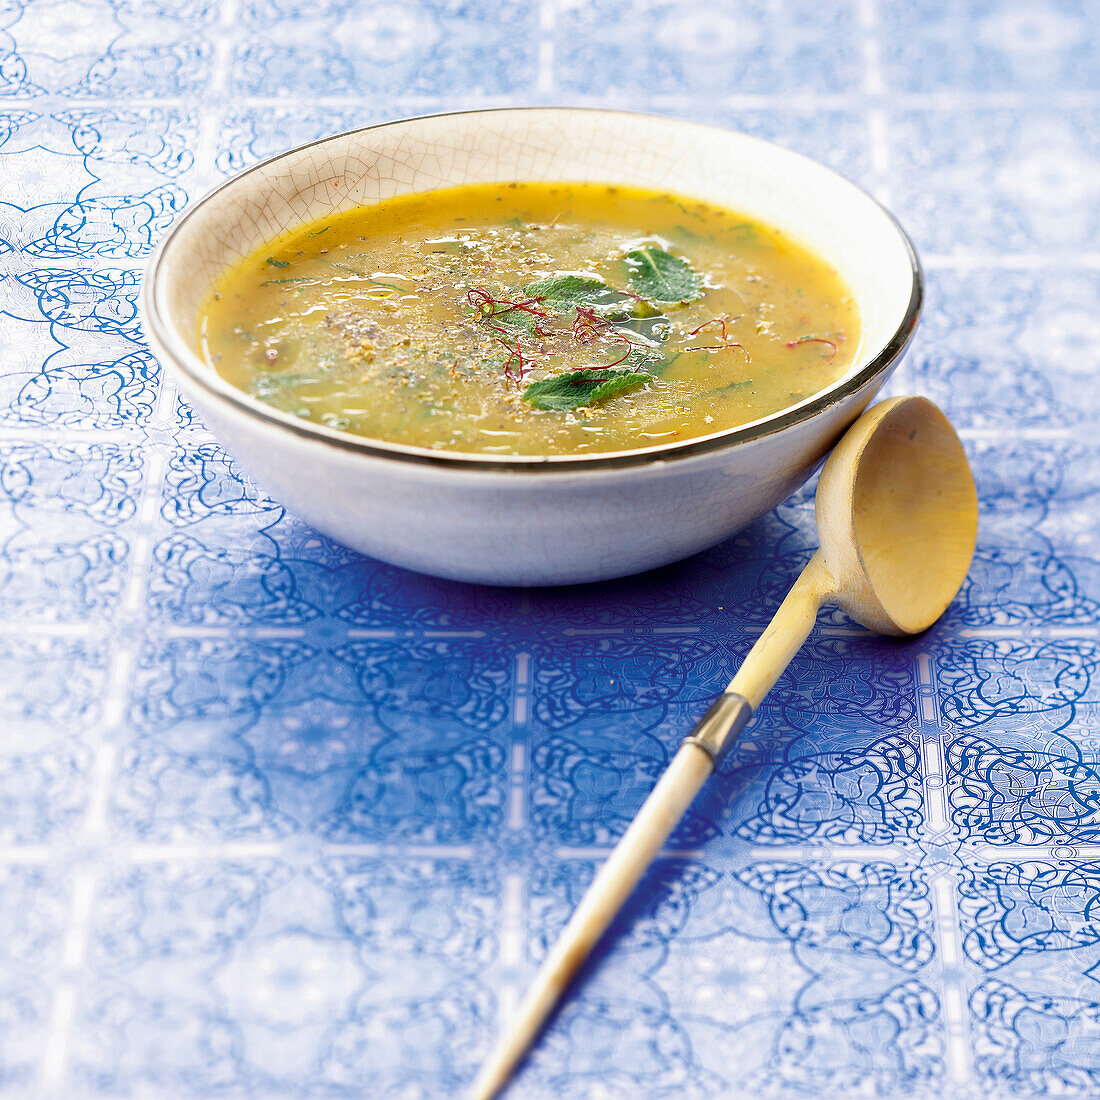 Garlic,oregano and saffron soup